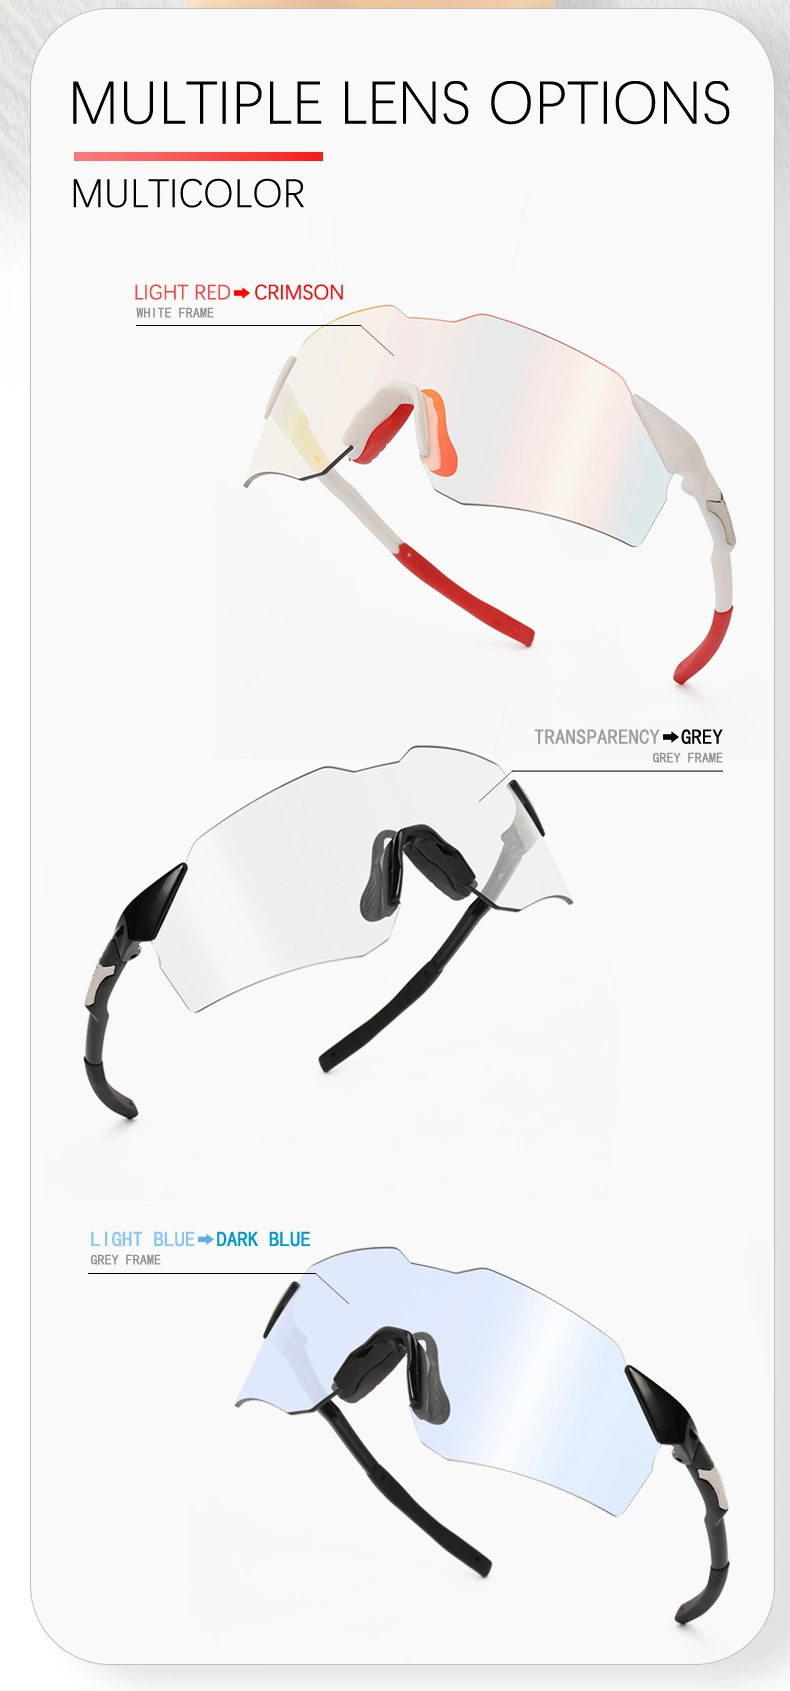 Customized Logo Sun Shades UV Protection Baseball and Golf Sport Sunglasses